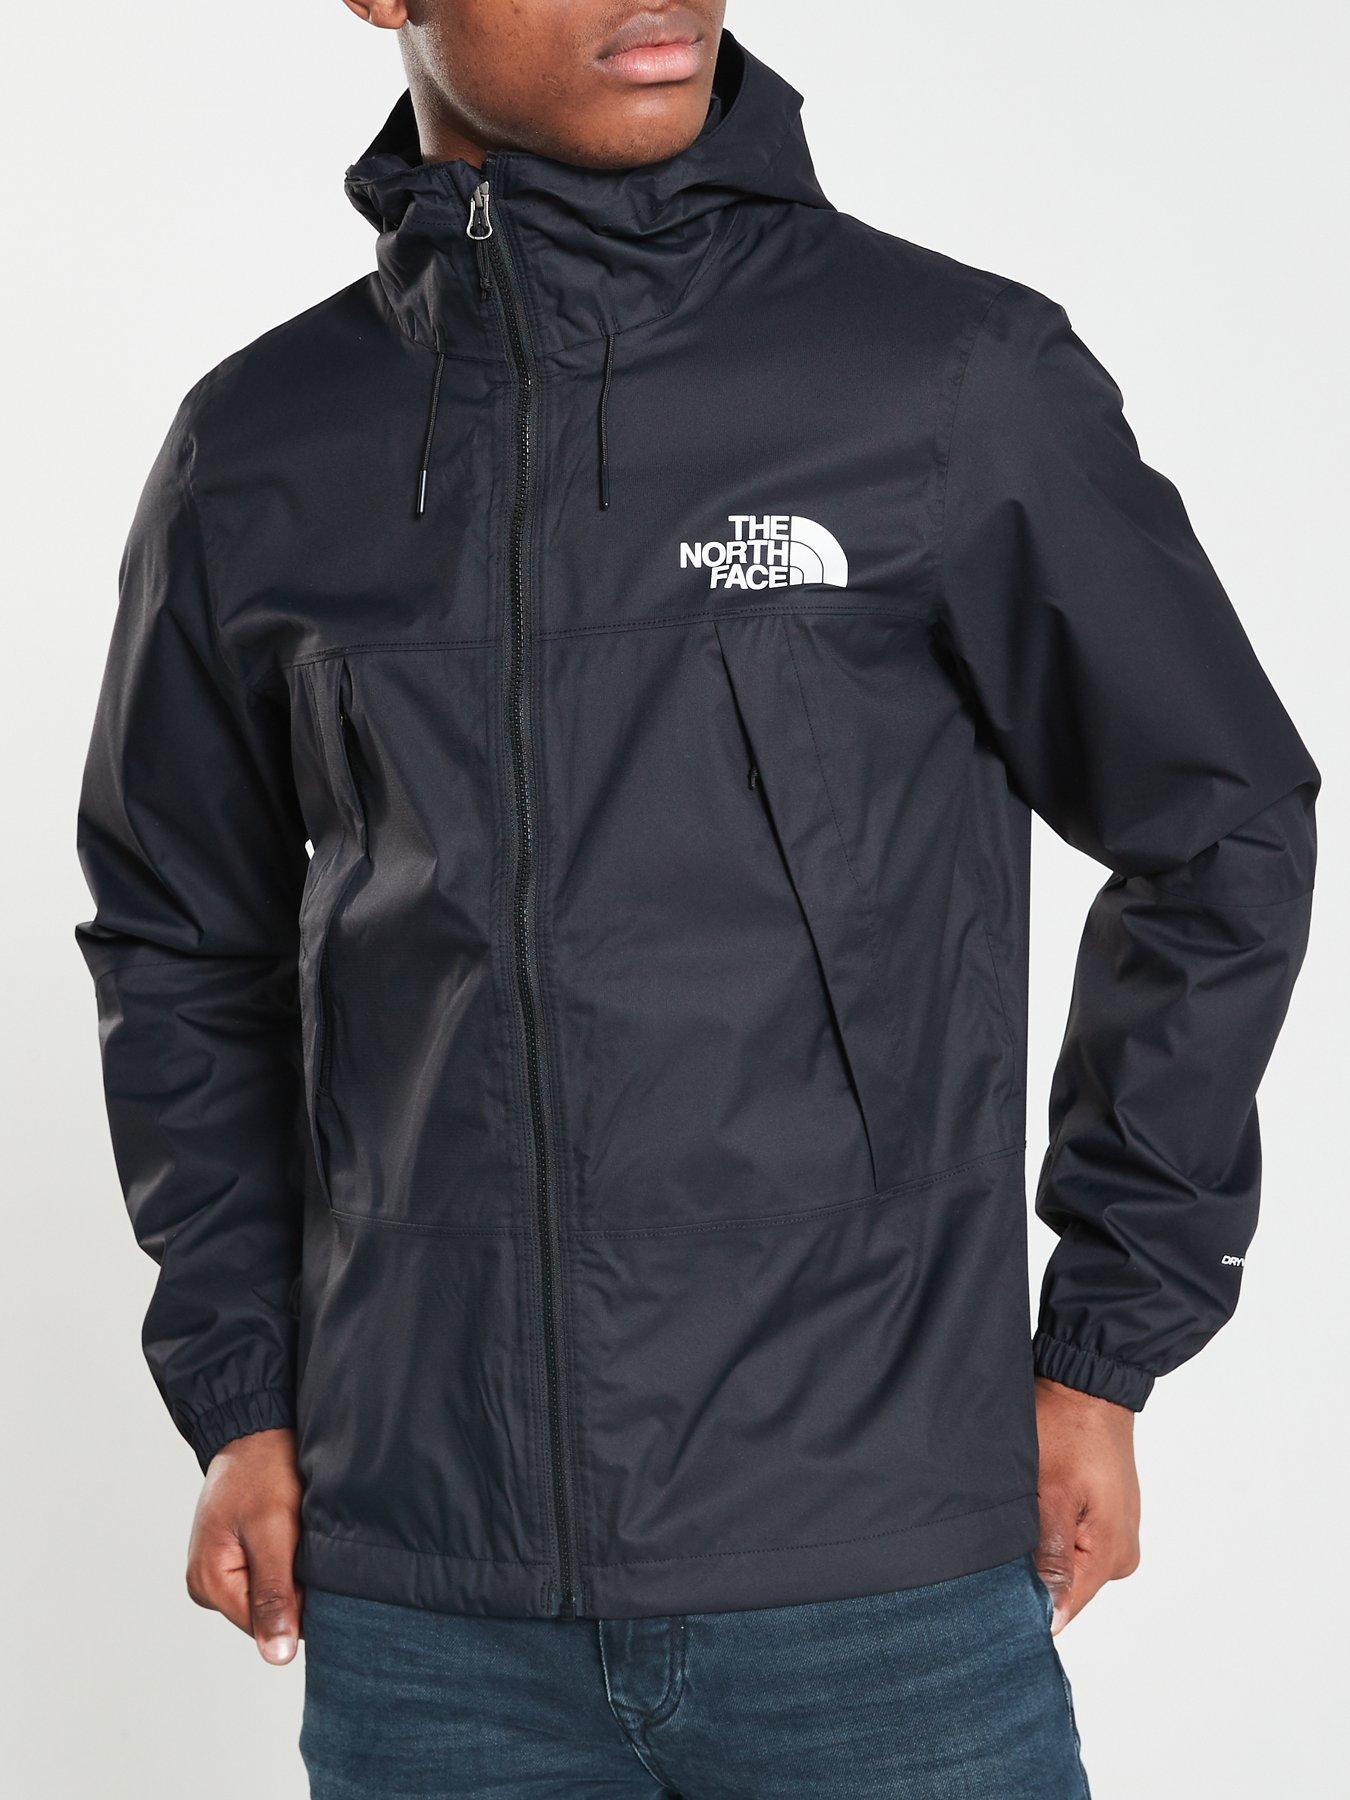 north face mountain jacket black